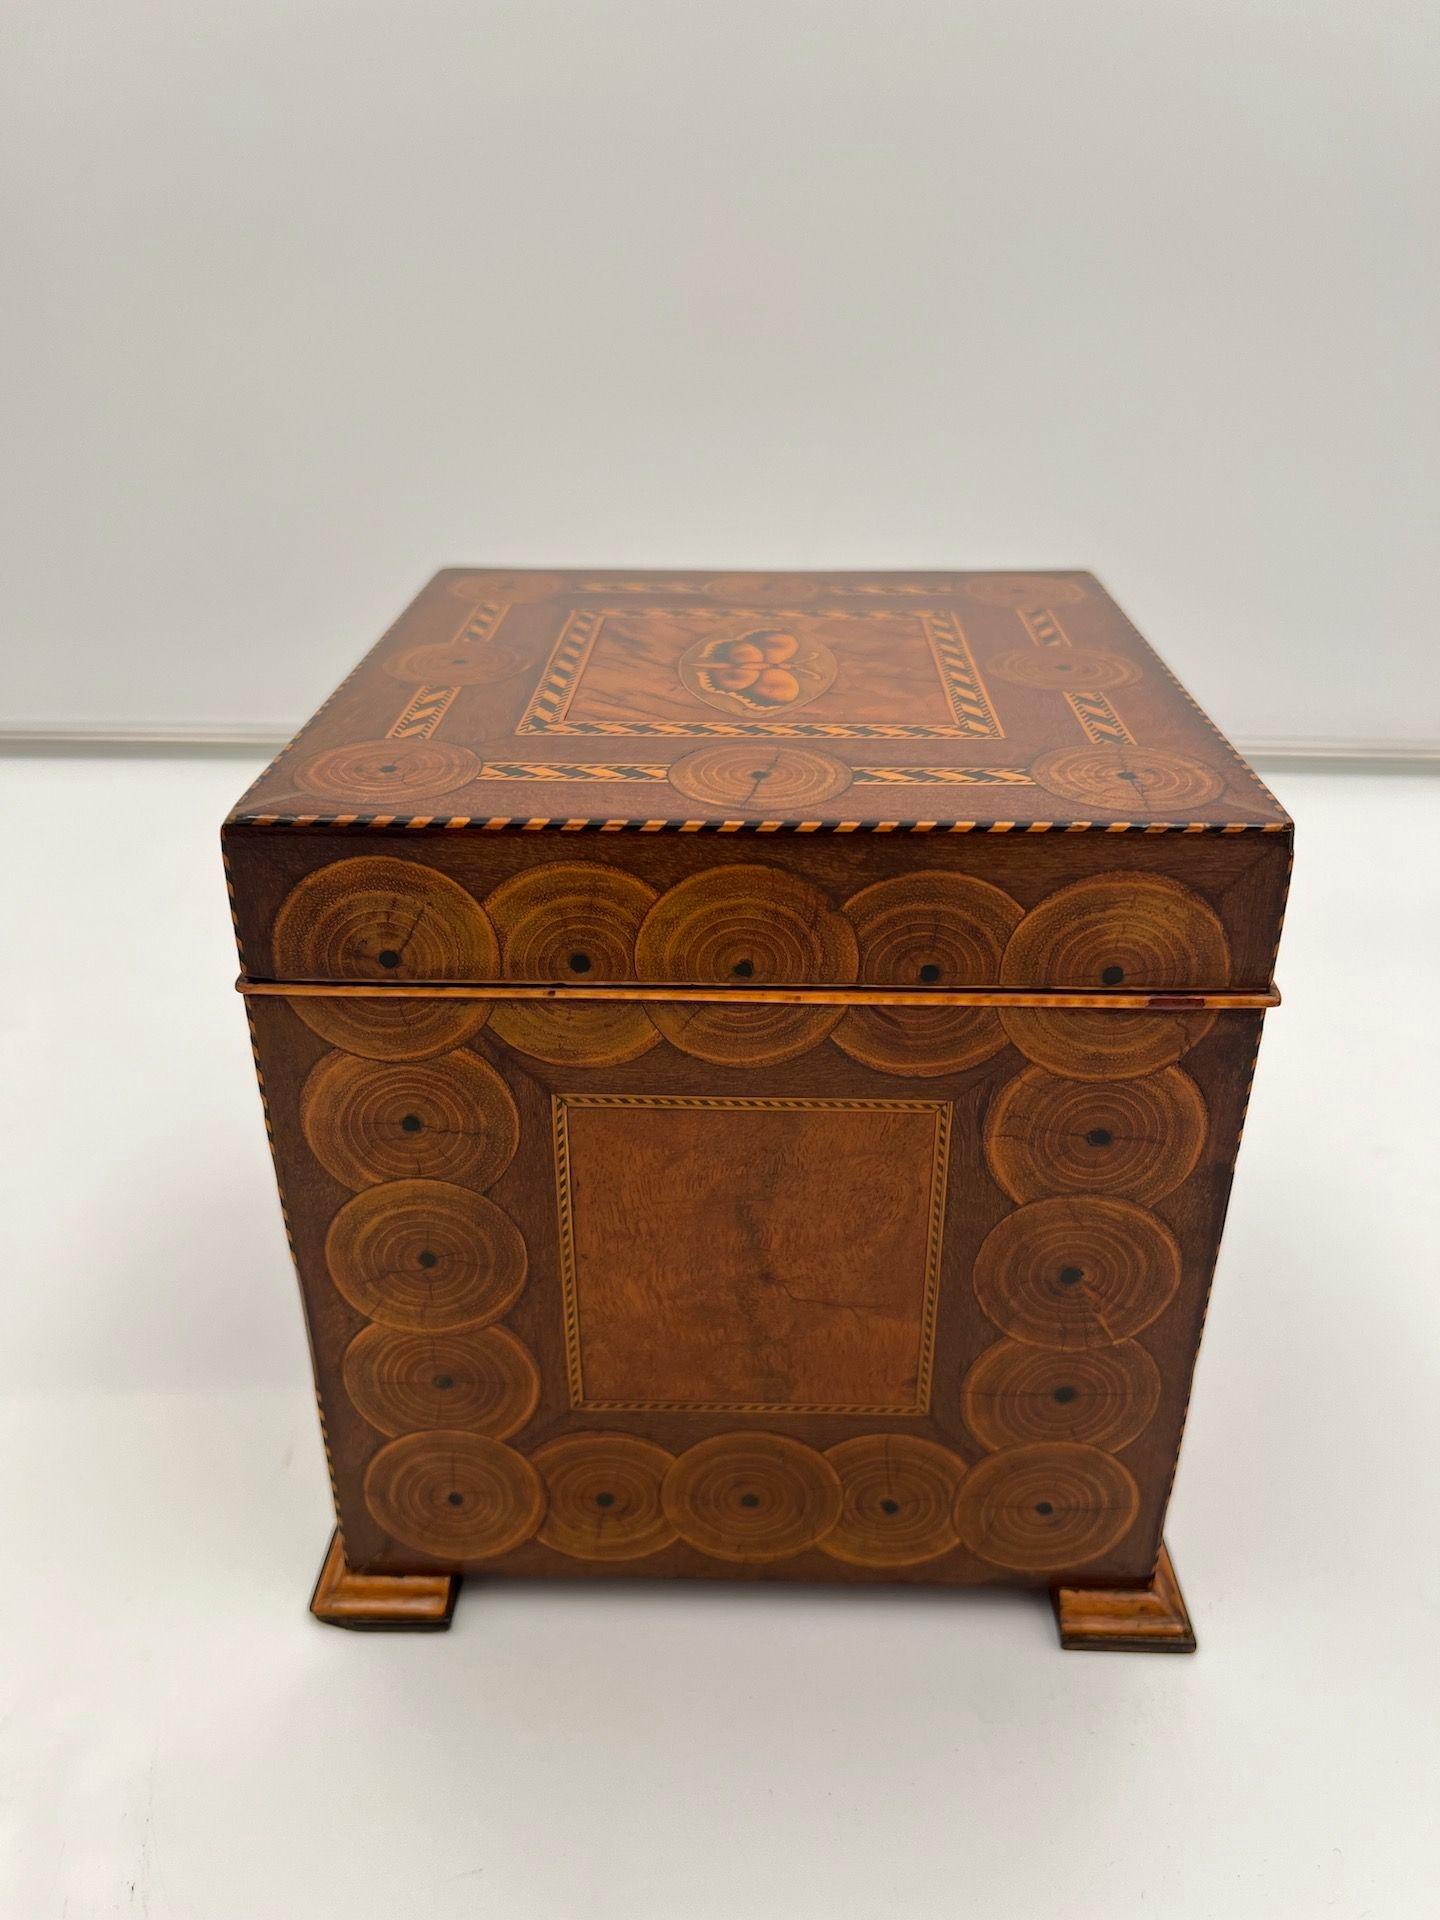 19th Century Cubic Biedermeier Box, Walnut with Inlays, Austria, circa 1830